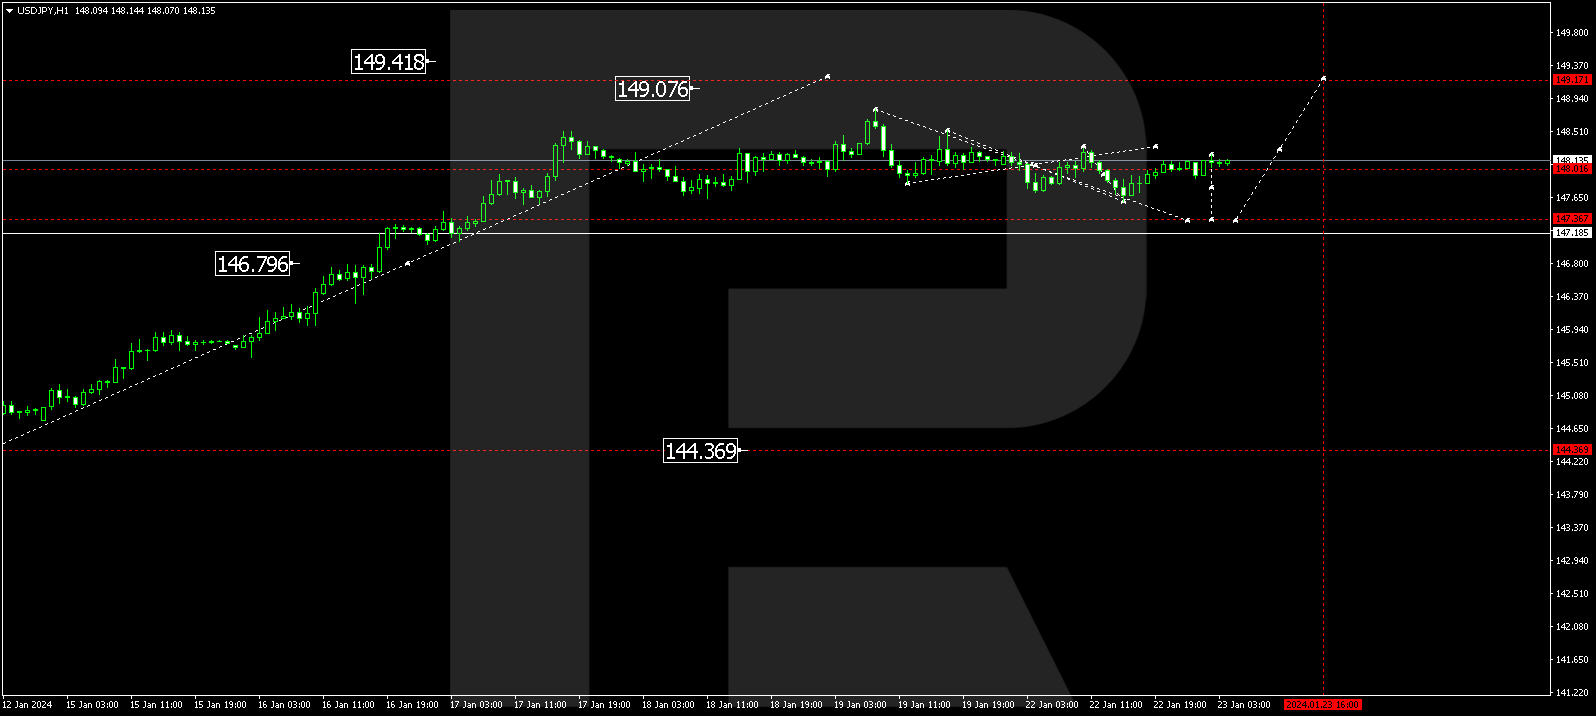 USD/JPY (US Dollar vs Japanese Yen)